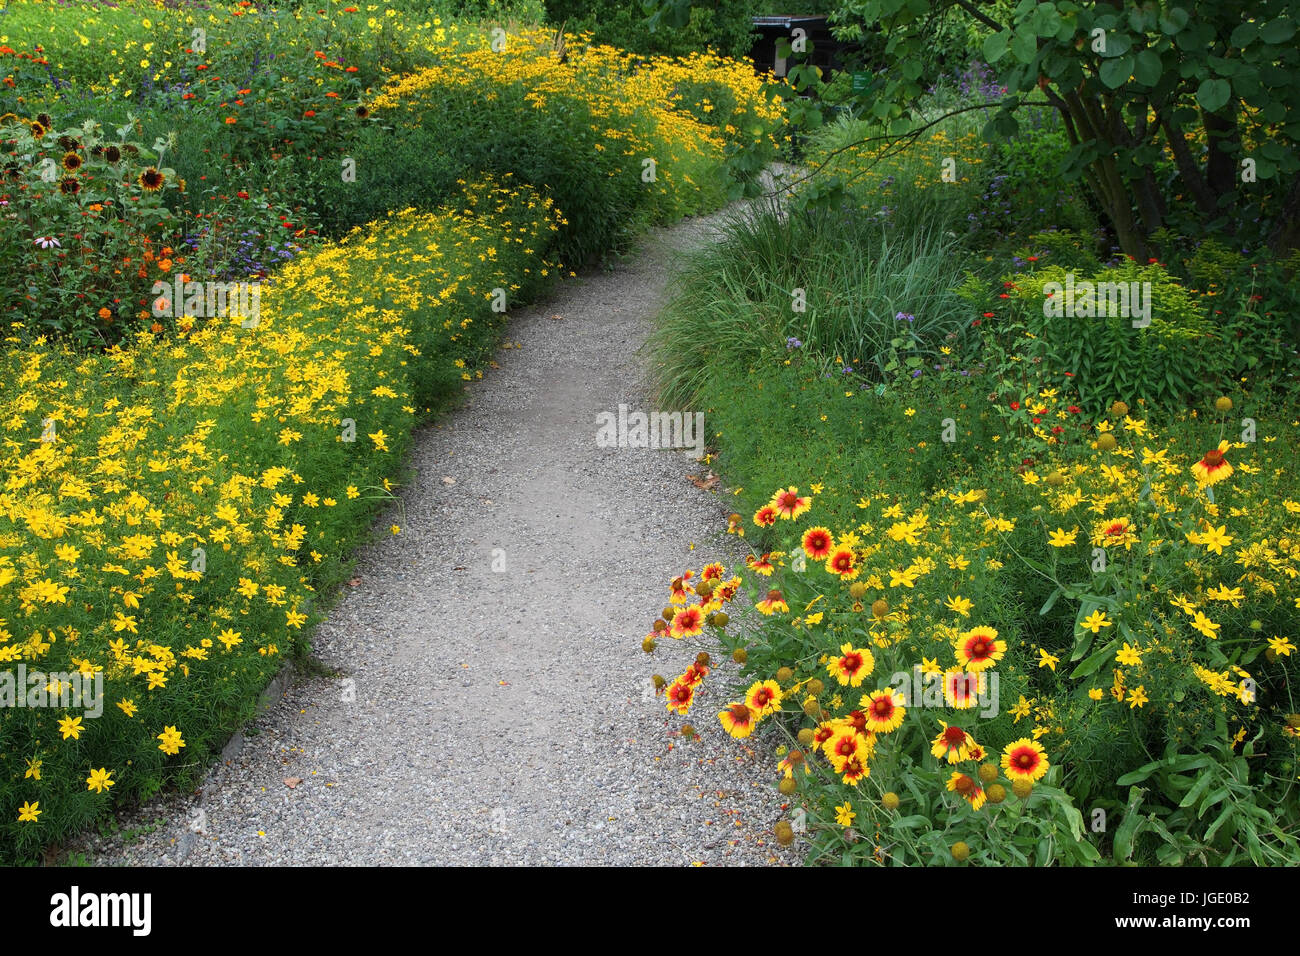 Garden path with Kokardenblume in summer, Gartenweg mit Kokardenblume im Sommer Stock Photo